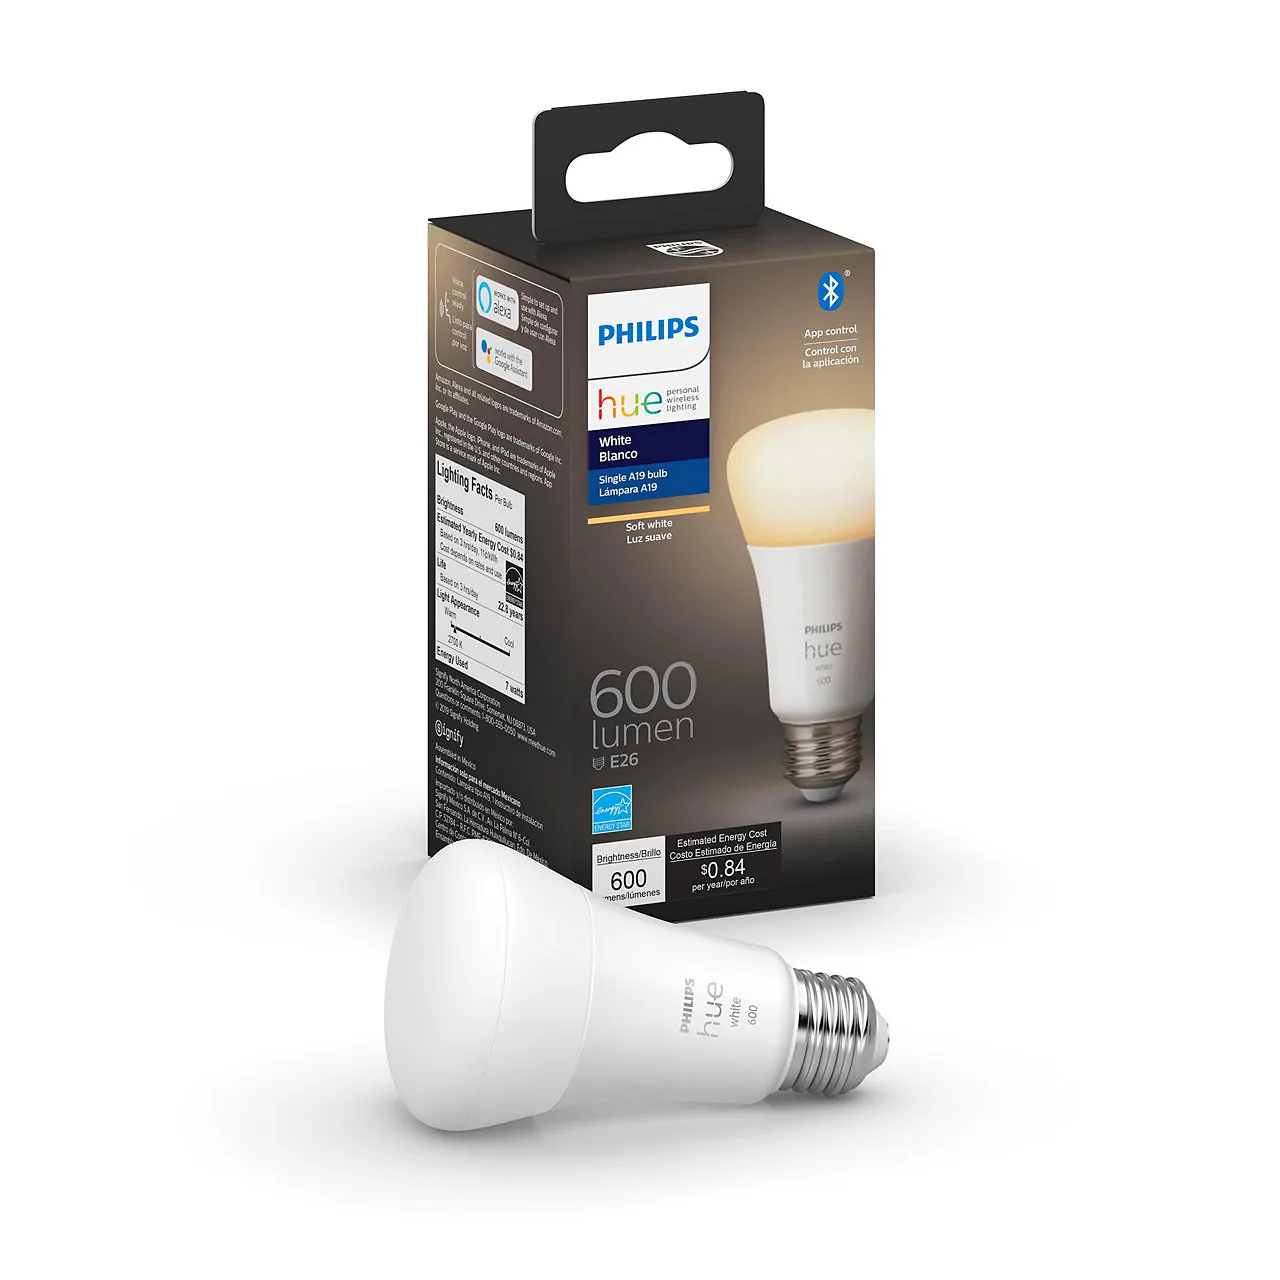 Hue White Bulb A19 E26 with Bluetooth